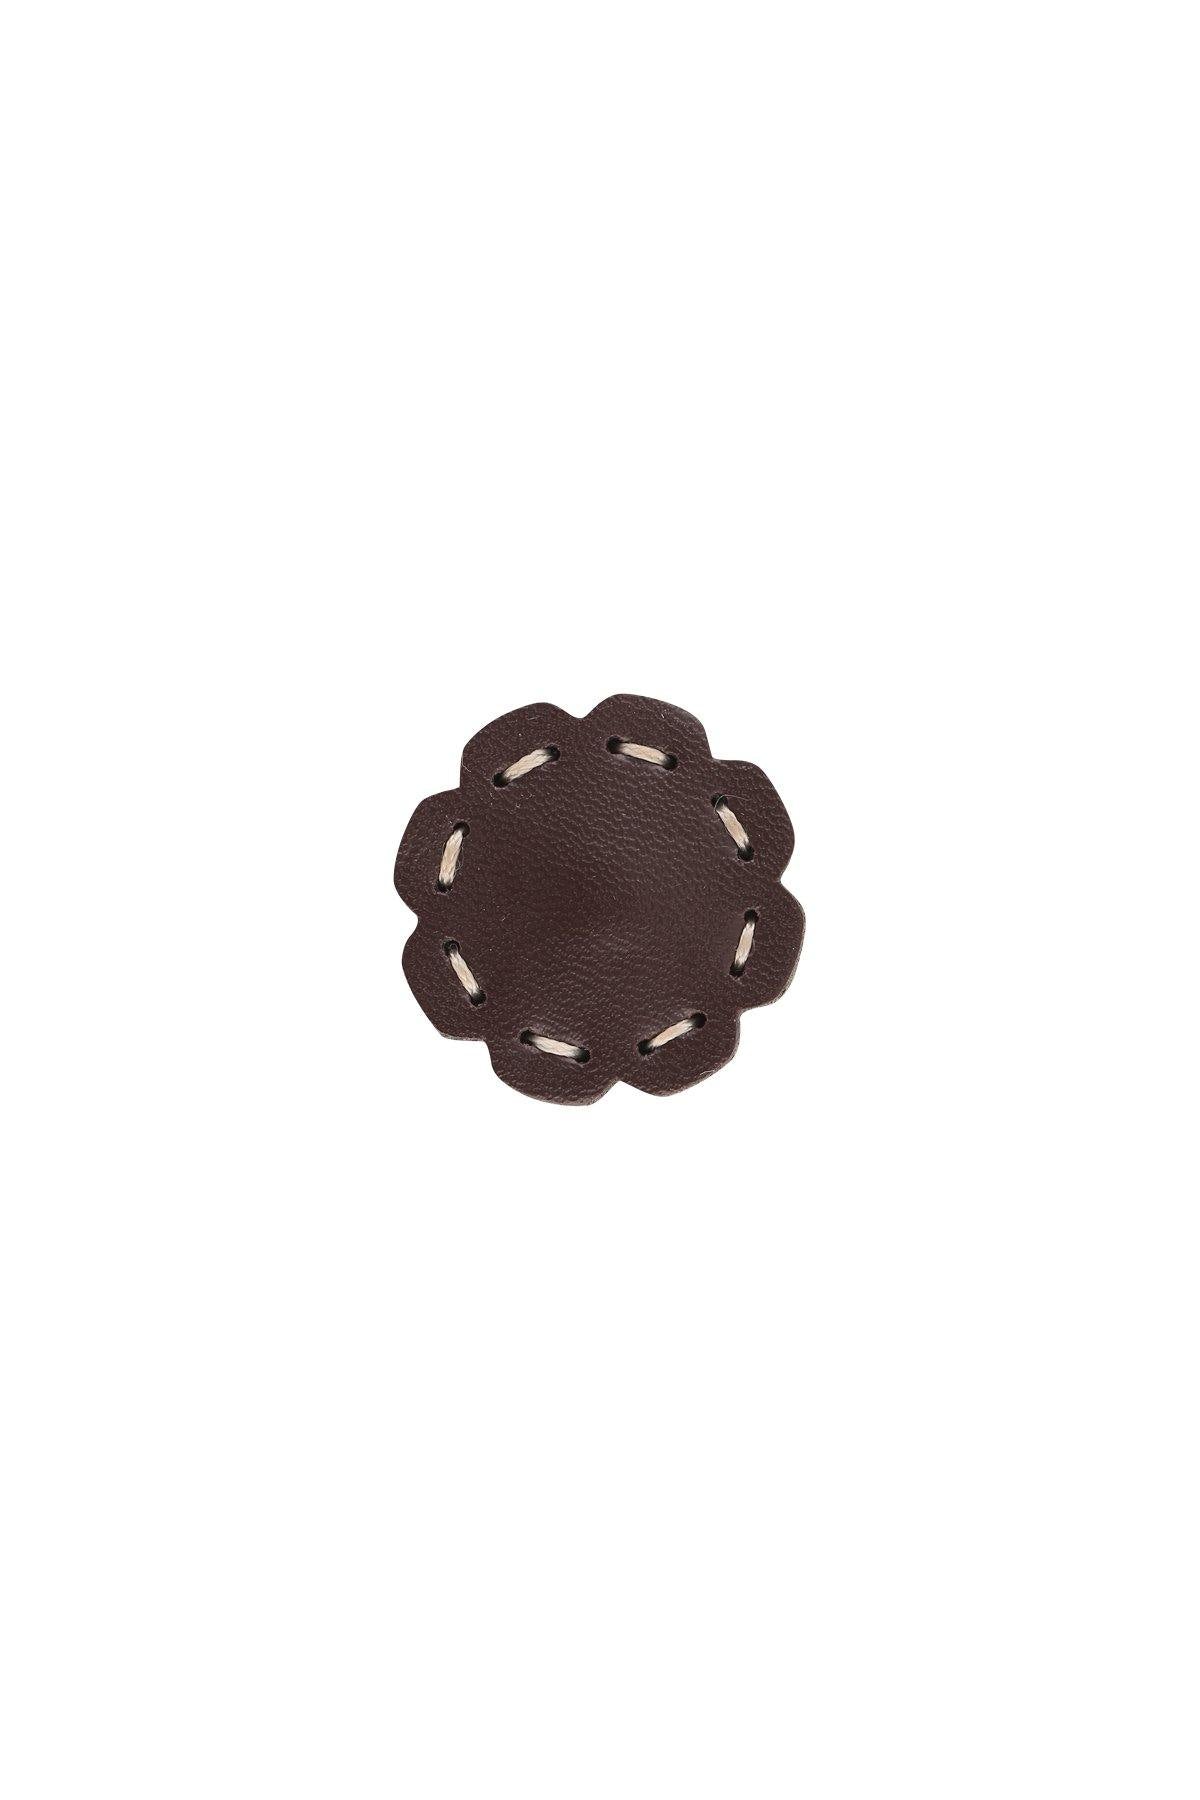 Round Flower Shape Dark Brown Stitched Leather Downhole Loop Button